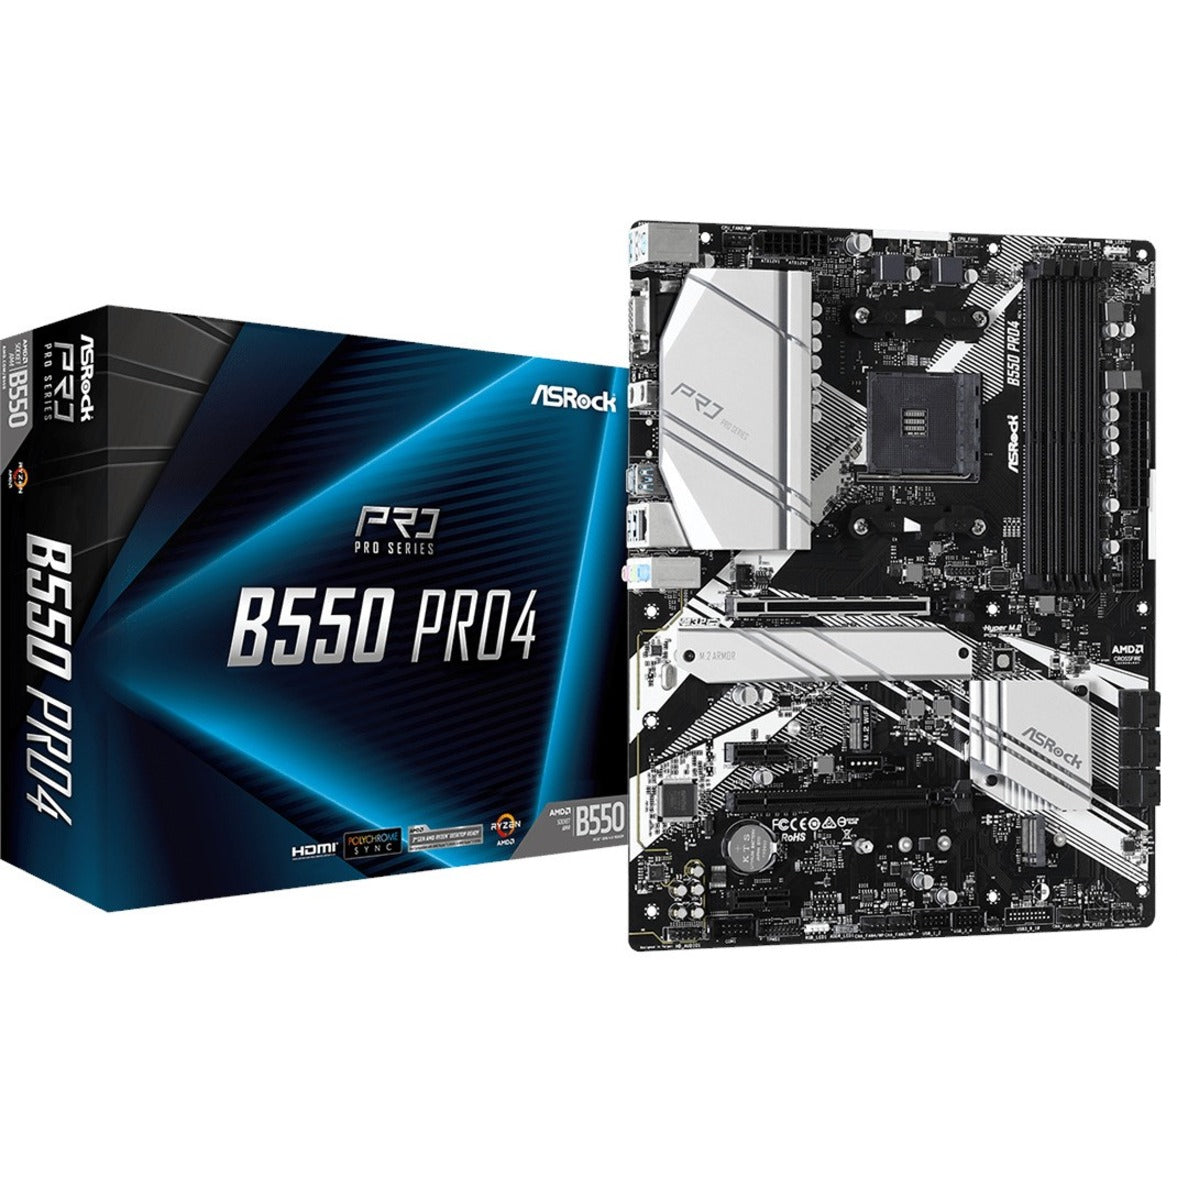 ASRock B550 PRO4 B550 Pro4 Desktop Motherboard, AMD Ryzen Compatible, ATX Form Factor